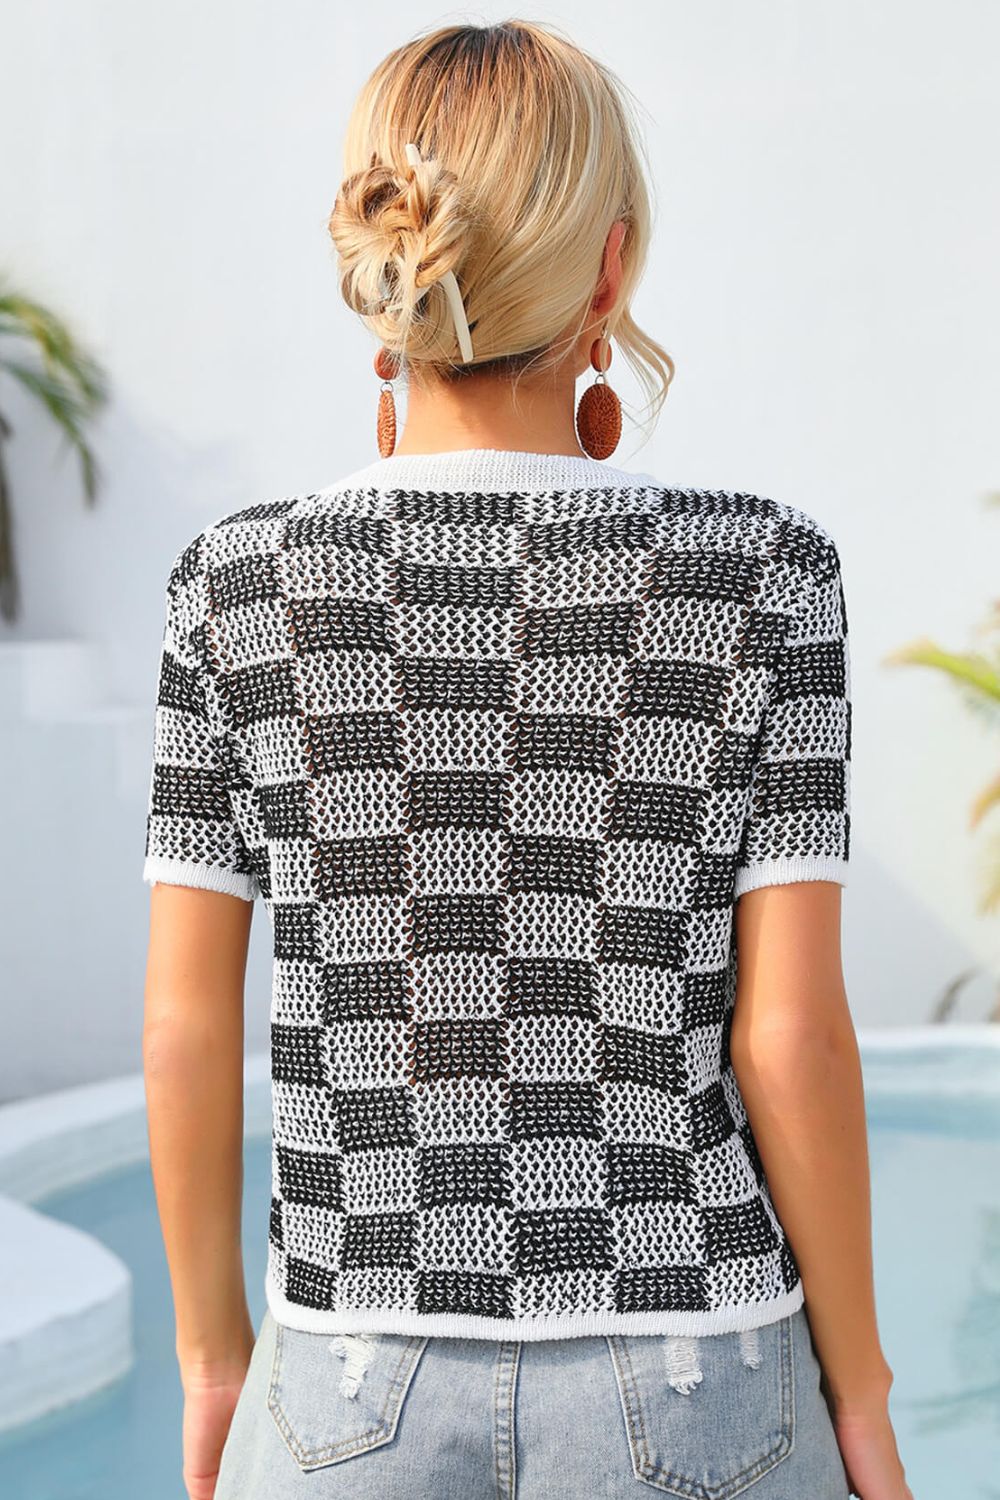 Women's Checkered Short Sleeve Knit Top